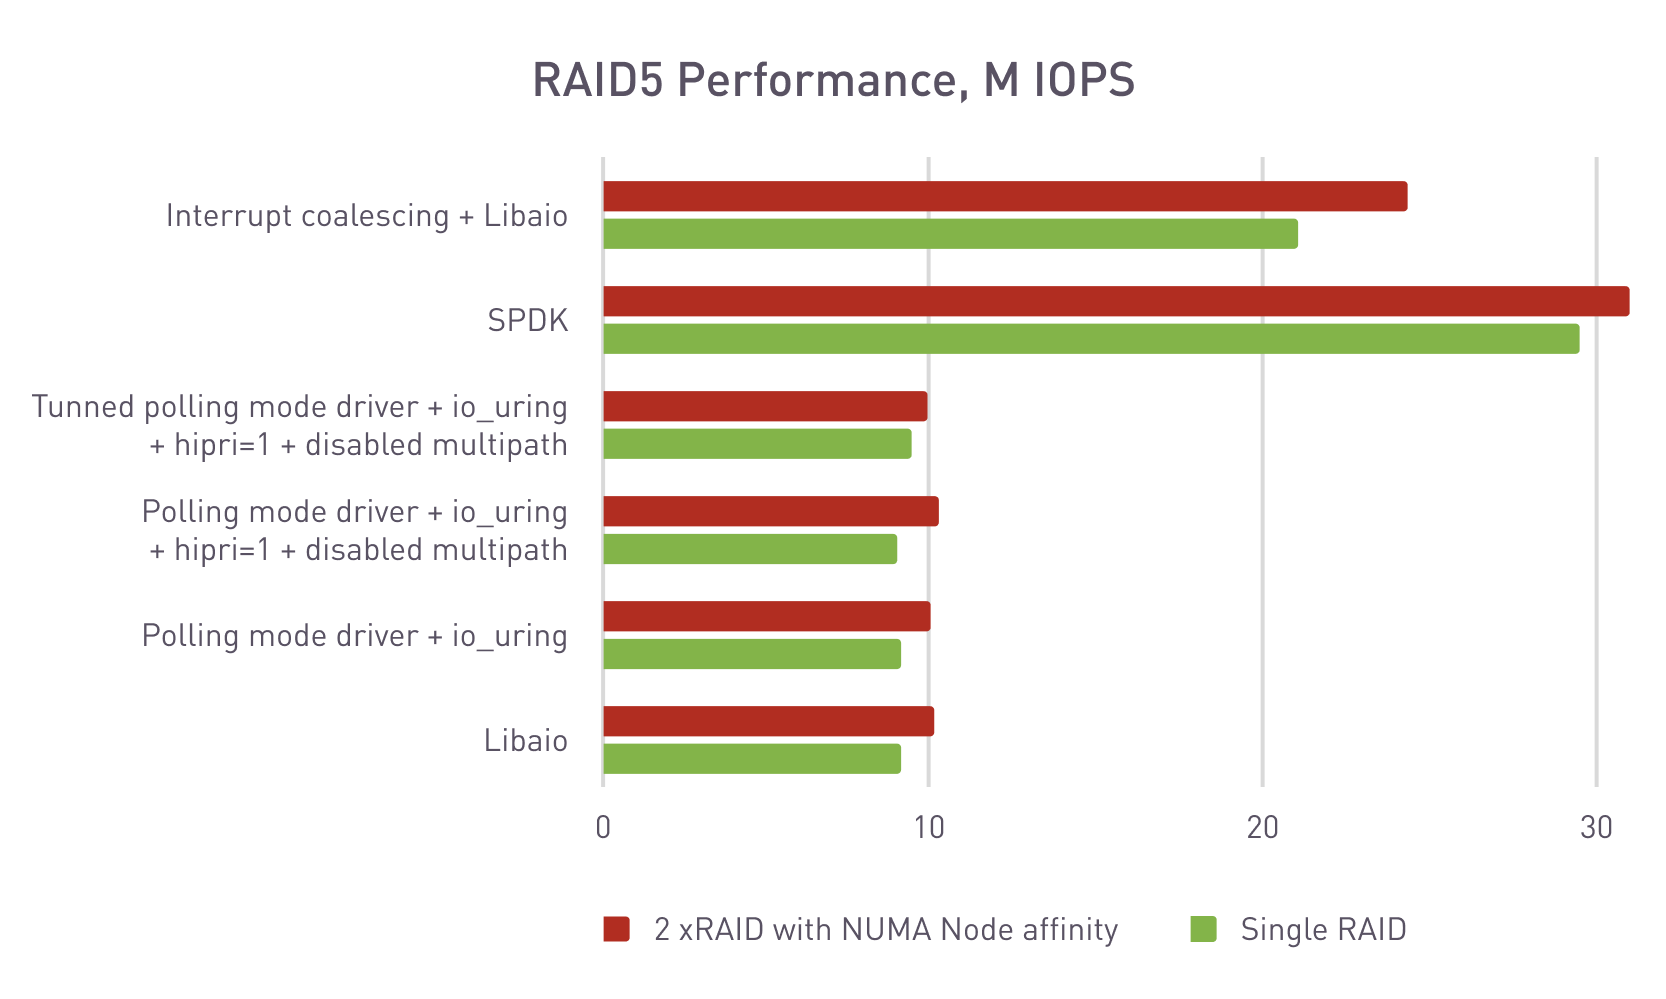 RAID5 performance